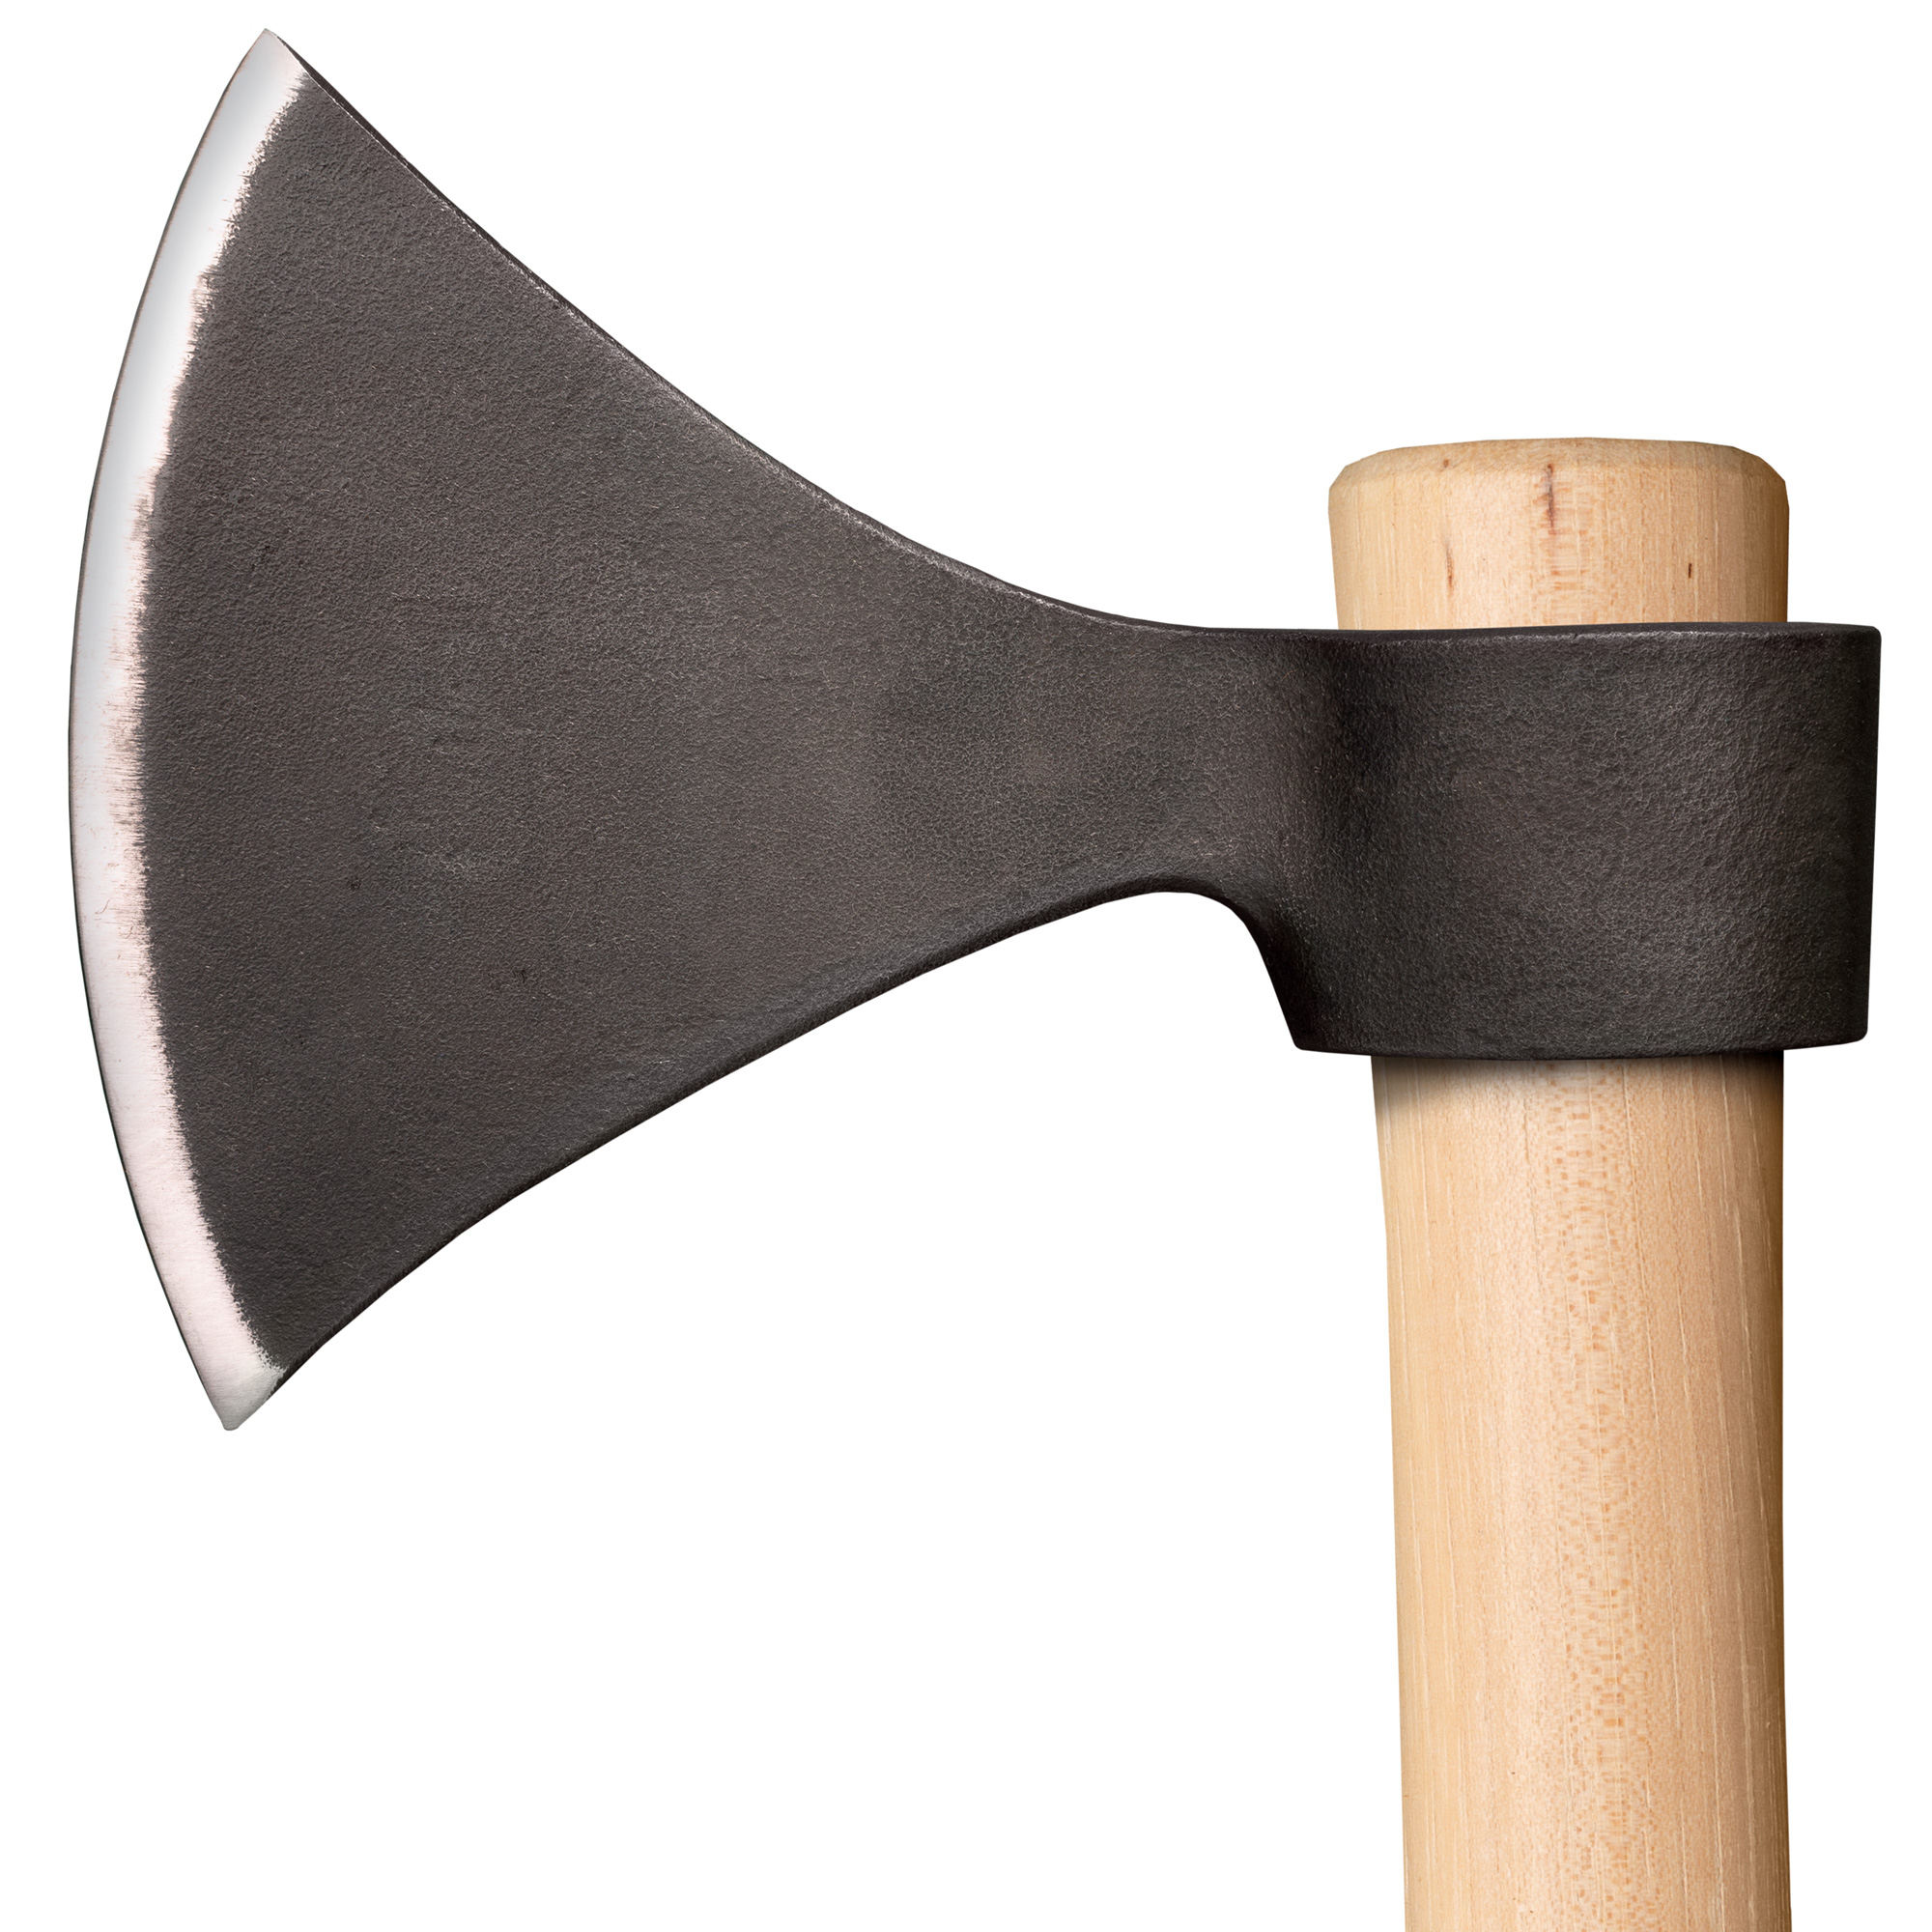 cold steel battle axe